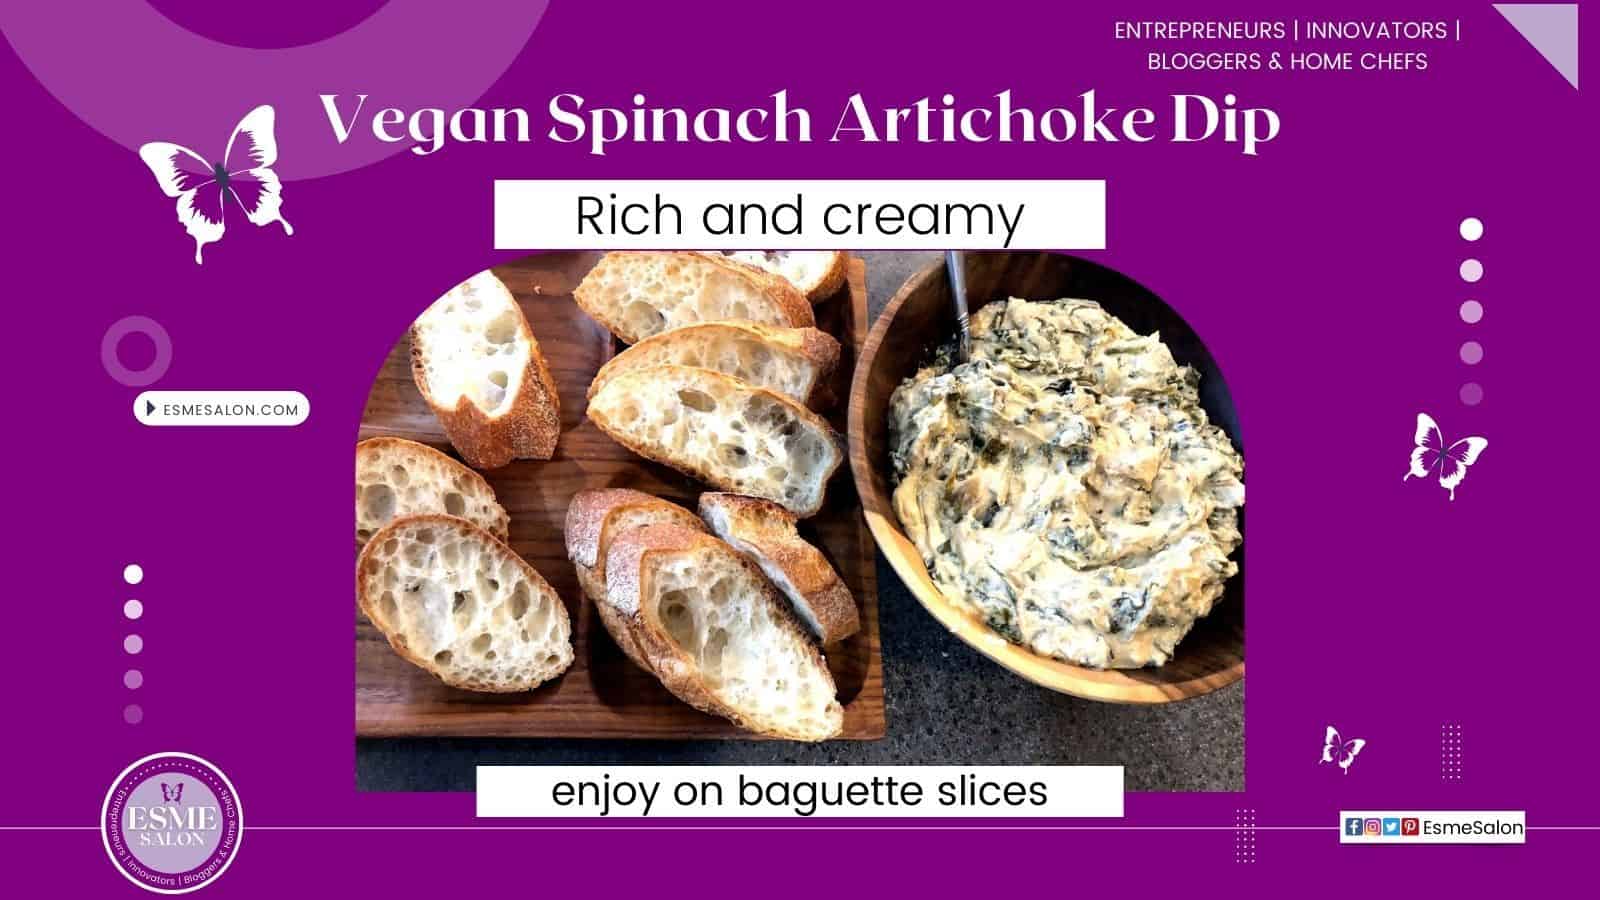 Vegan Spinach Artichoke Dip made from raw cashews, coconut milk, artichoke and frozen spinach